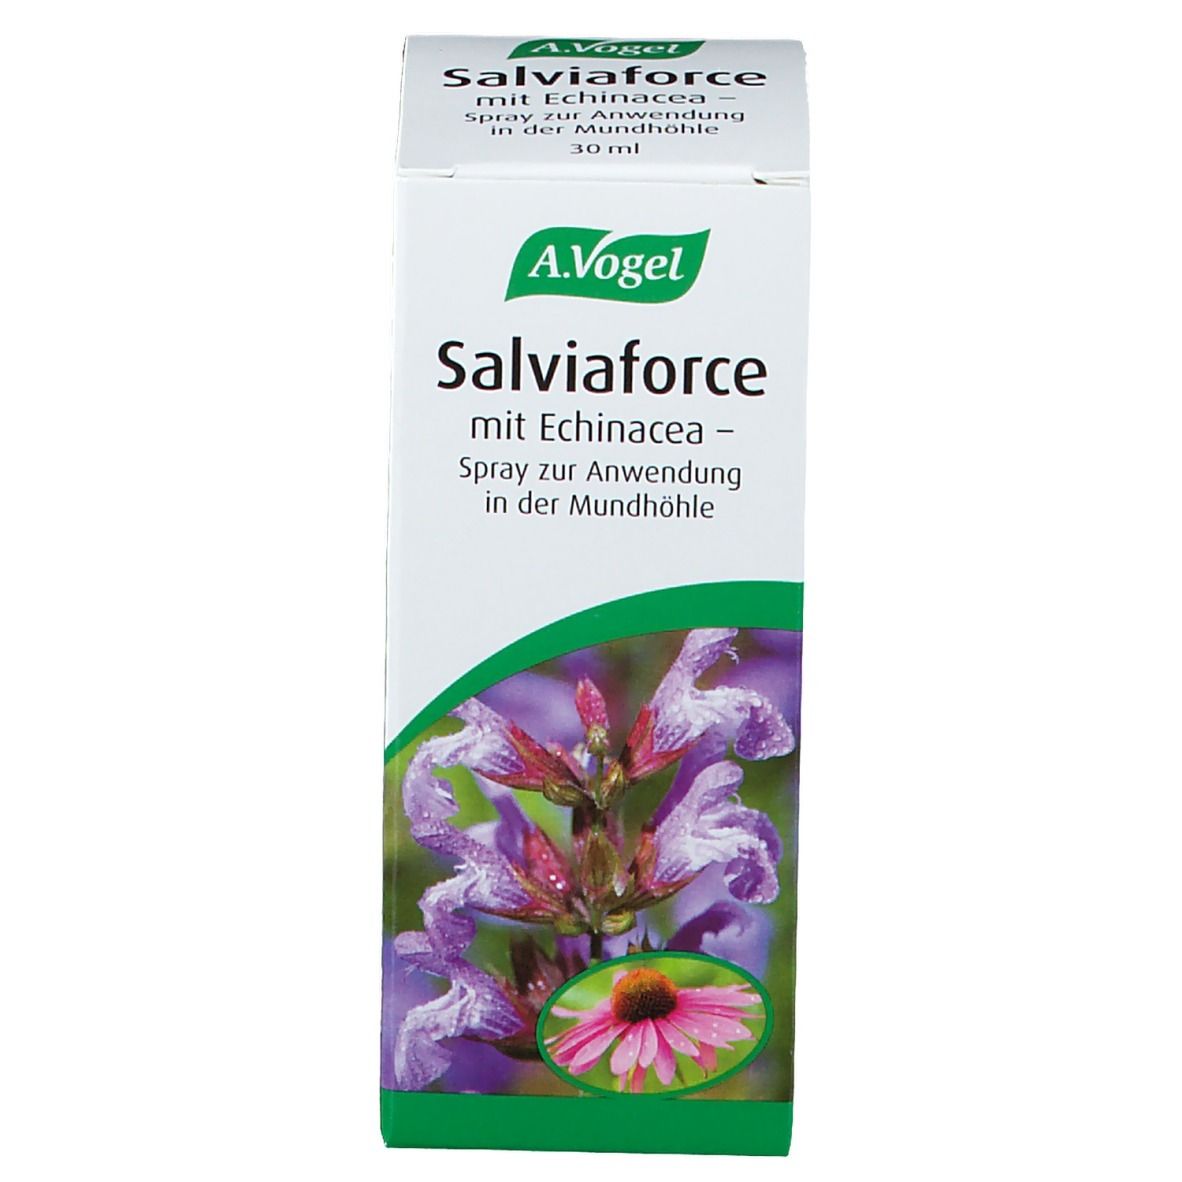 A.Vogel Salviaforce mit Echinacea Spray